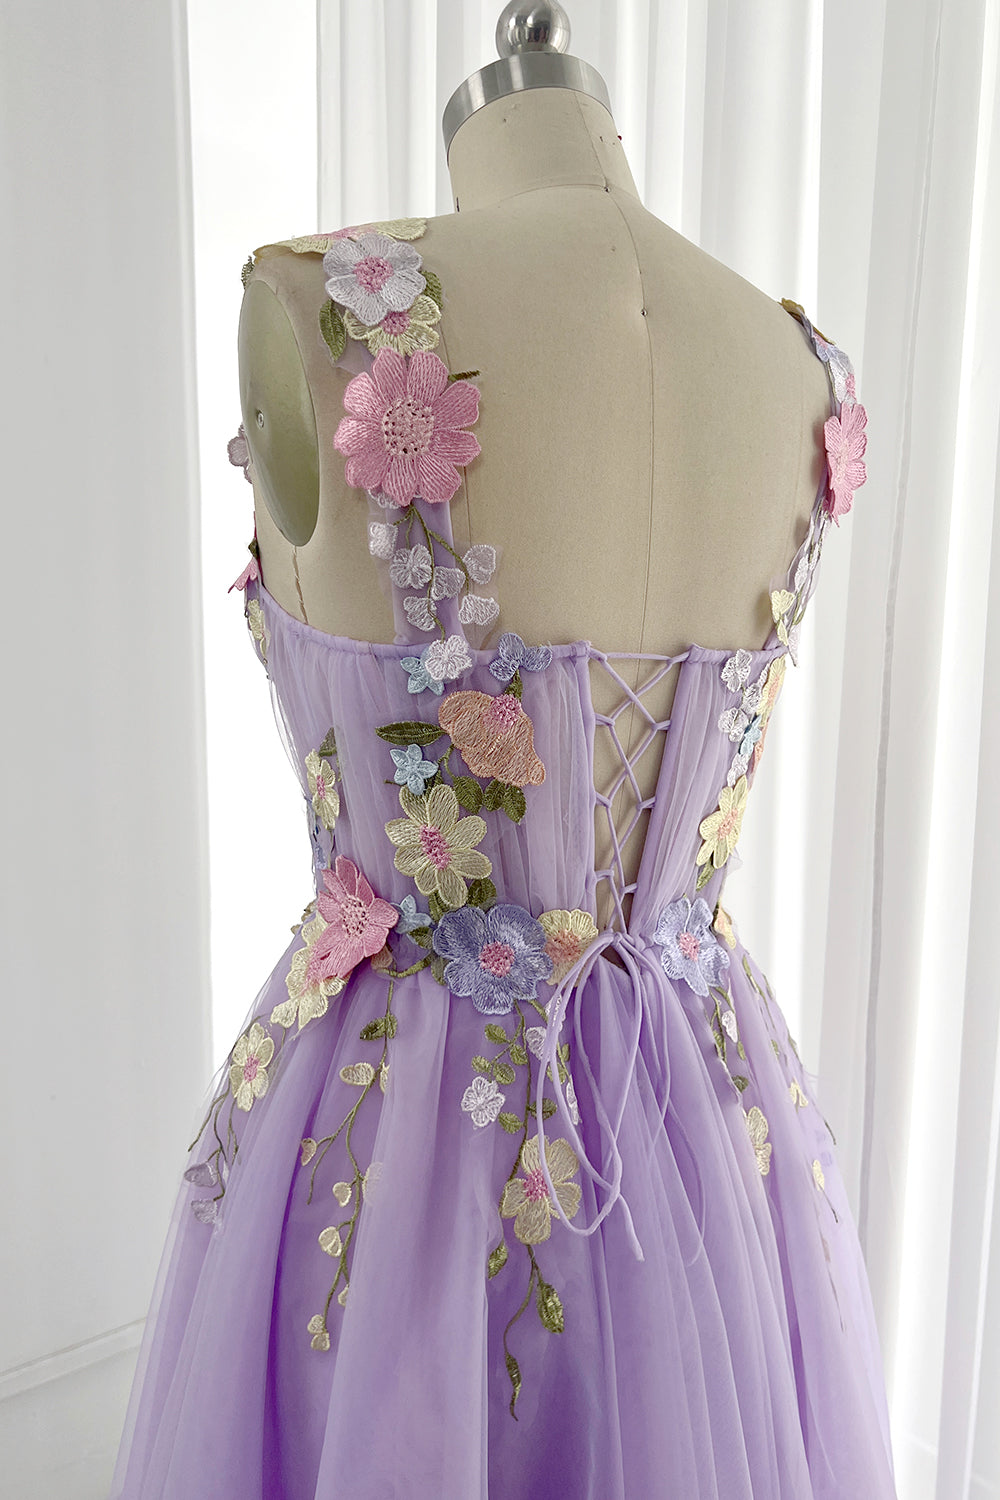 MissJophiel Embroidery Floral Midi Lavender Prom Dress